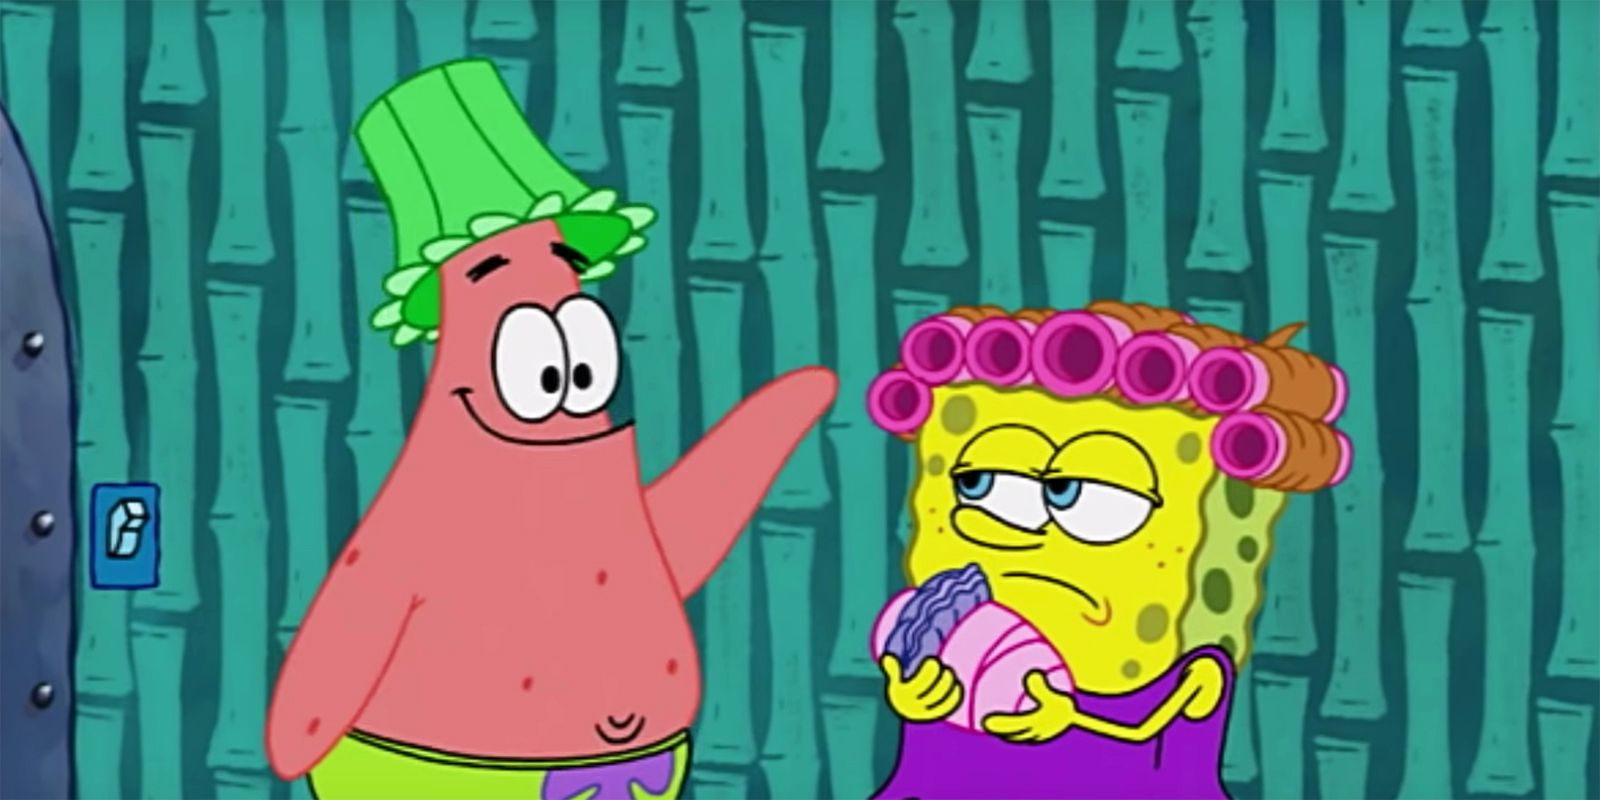 is spongebob gay for patrick